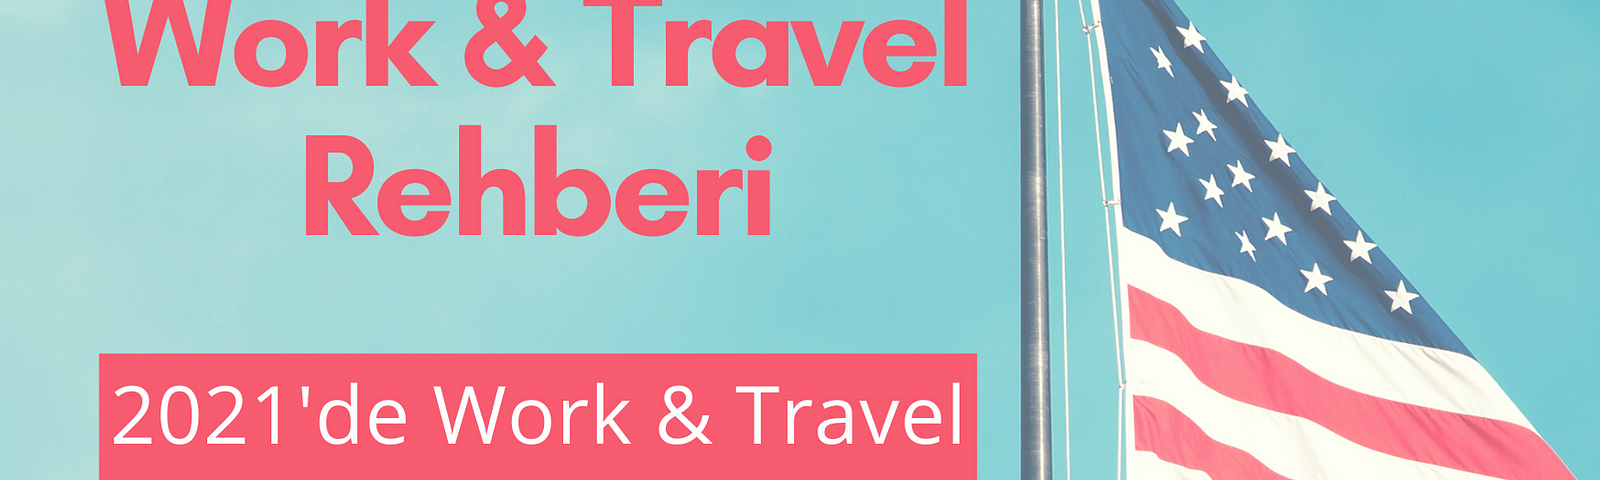 Work and Travel Rehberi